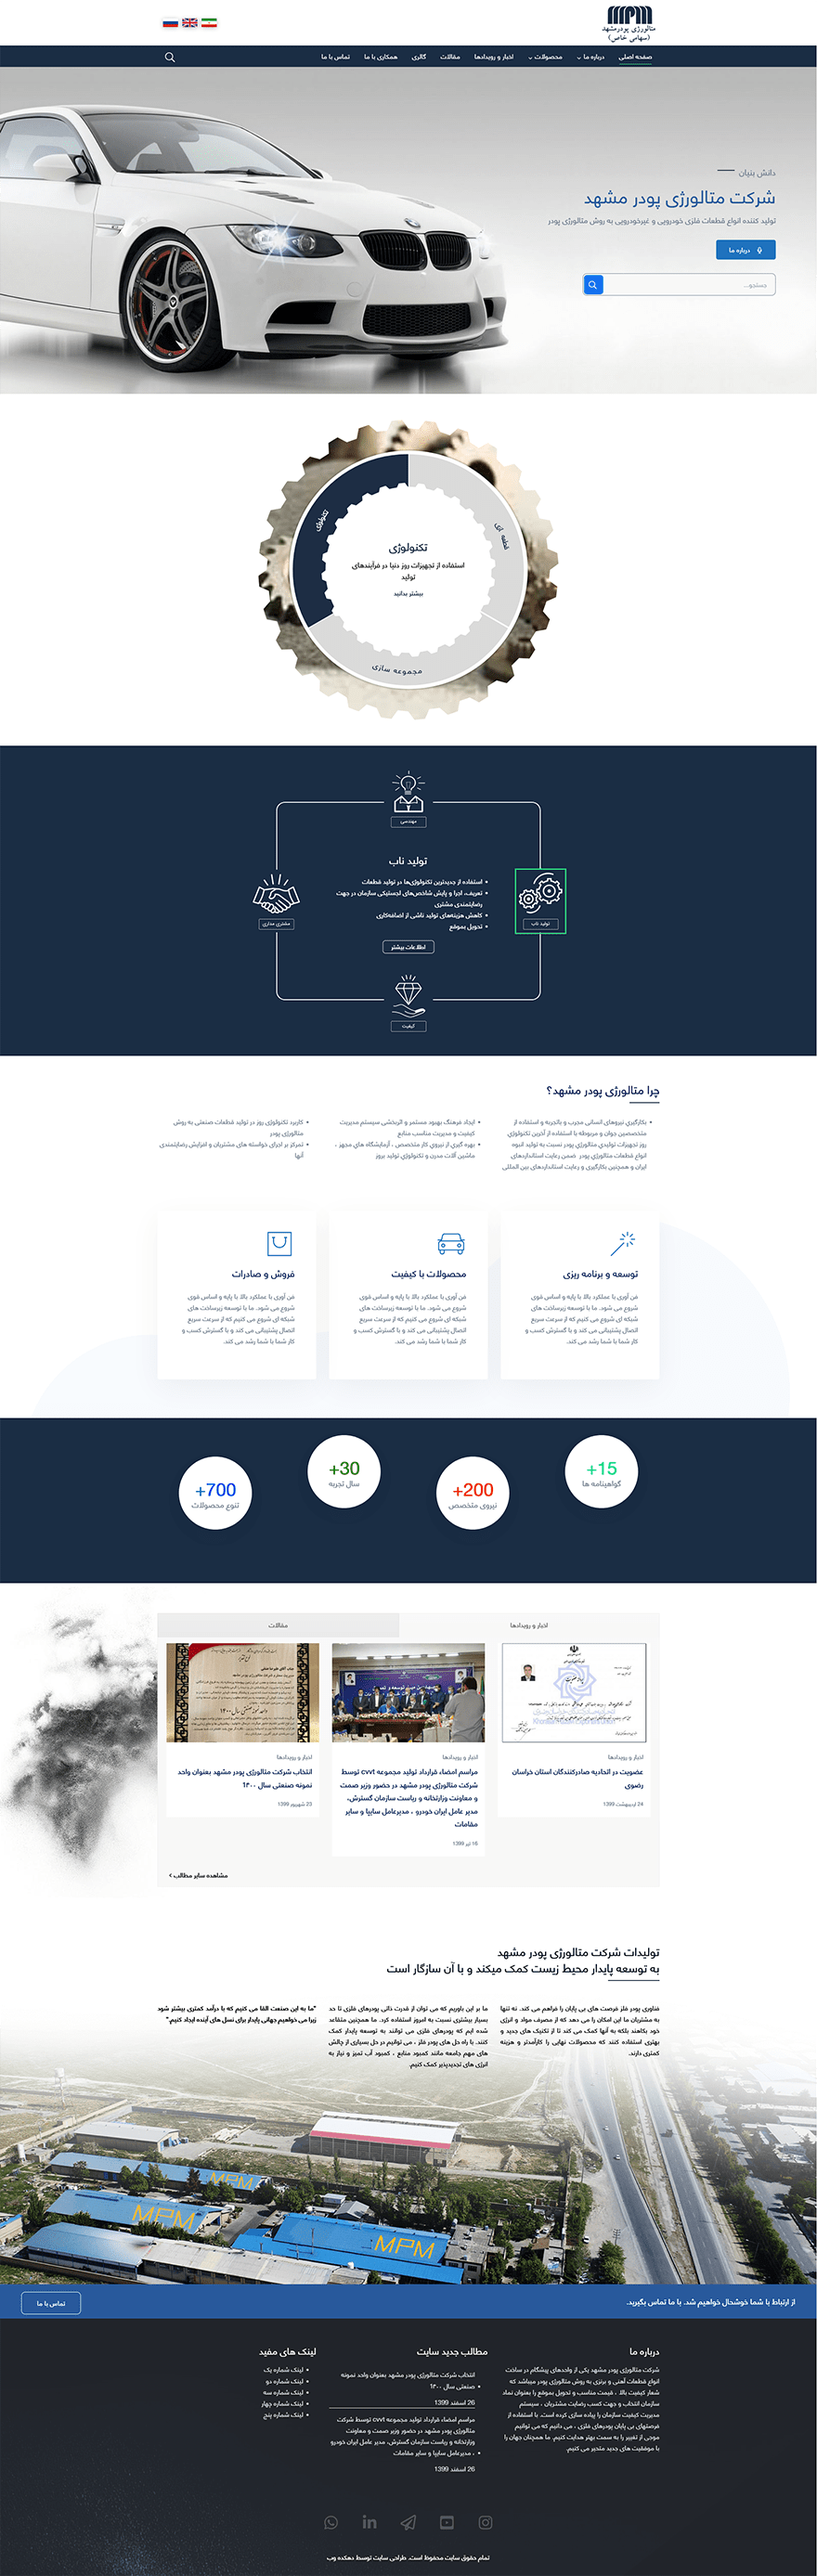 طراحی سایت شرکت متالورژی پودر مشهد